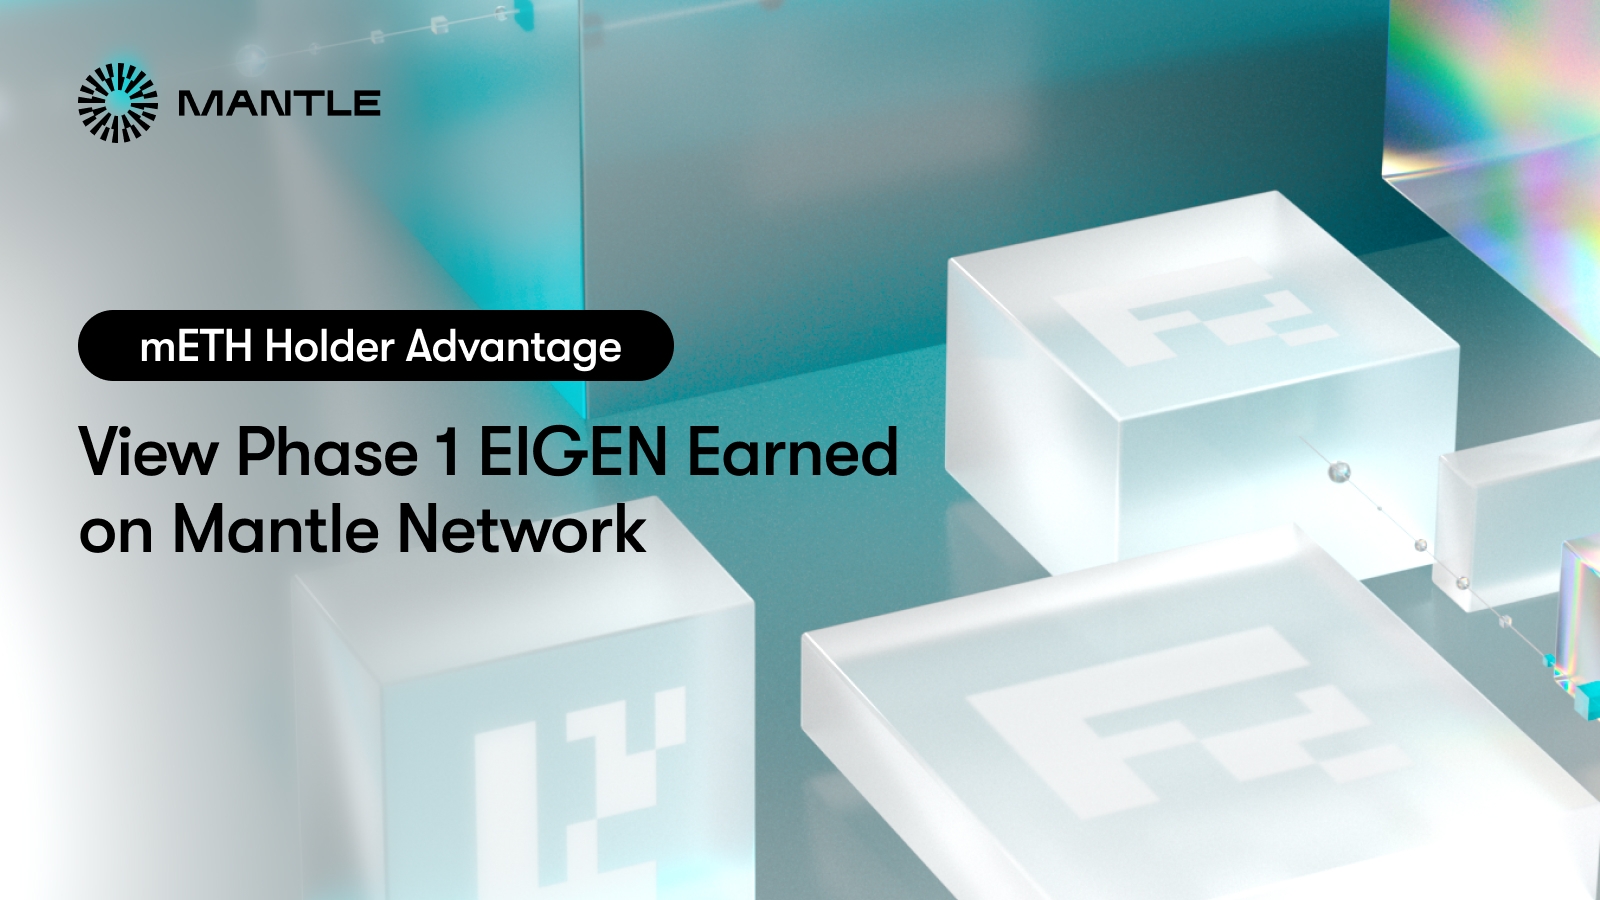 mETH Holder Advantage: View Phase 1 EIGEN Earned From EigenLayer Points on Mantle Network